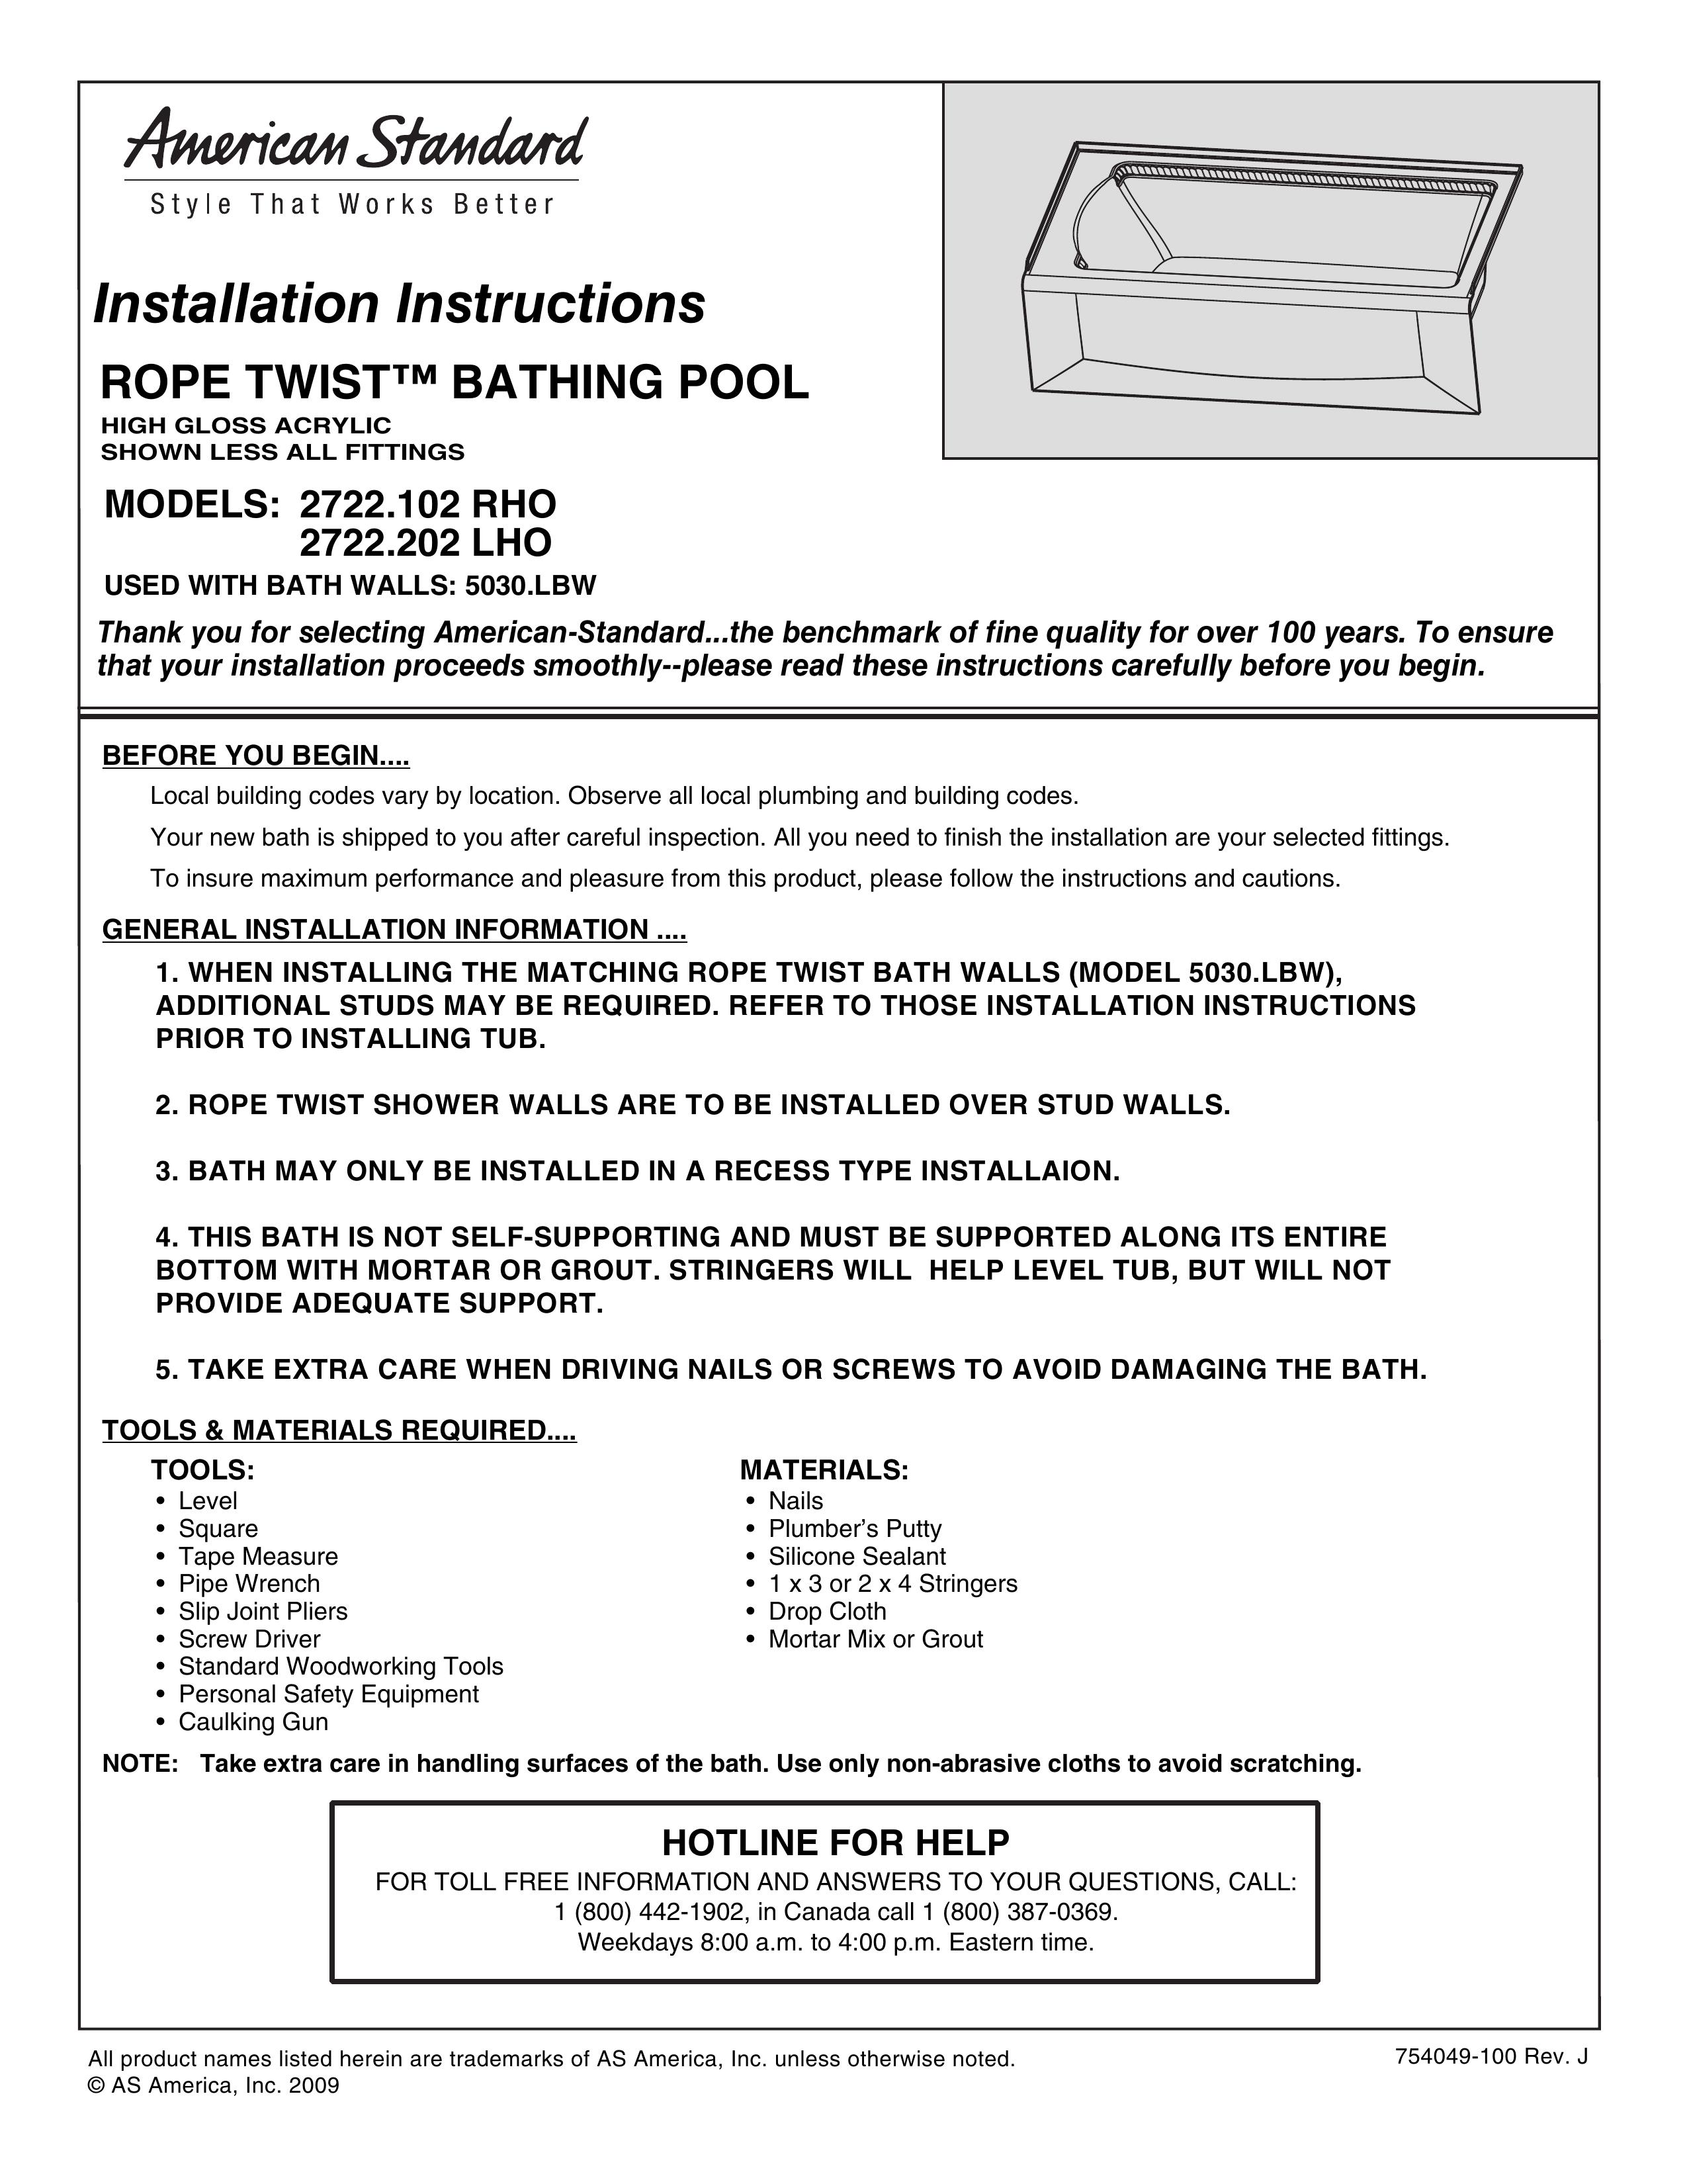 American Standard 2722.202 LHO Bathroom Aids User Manual